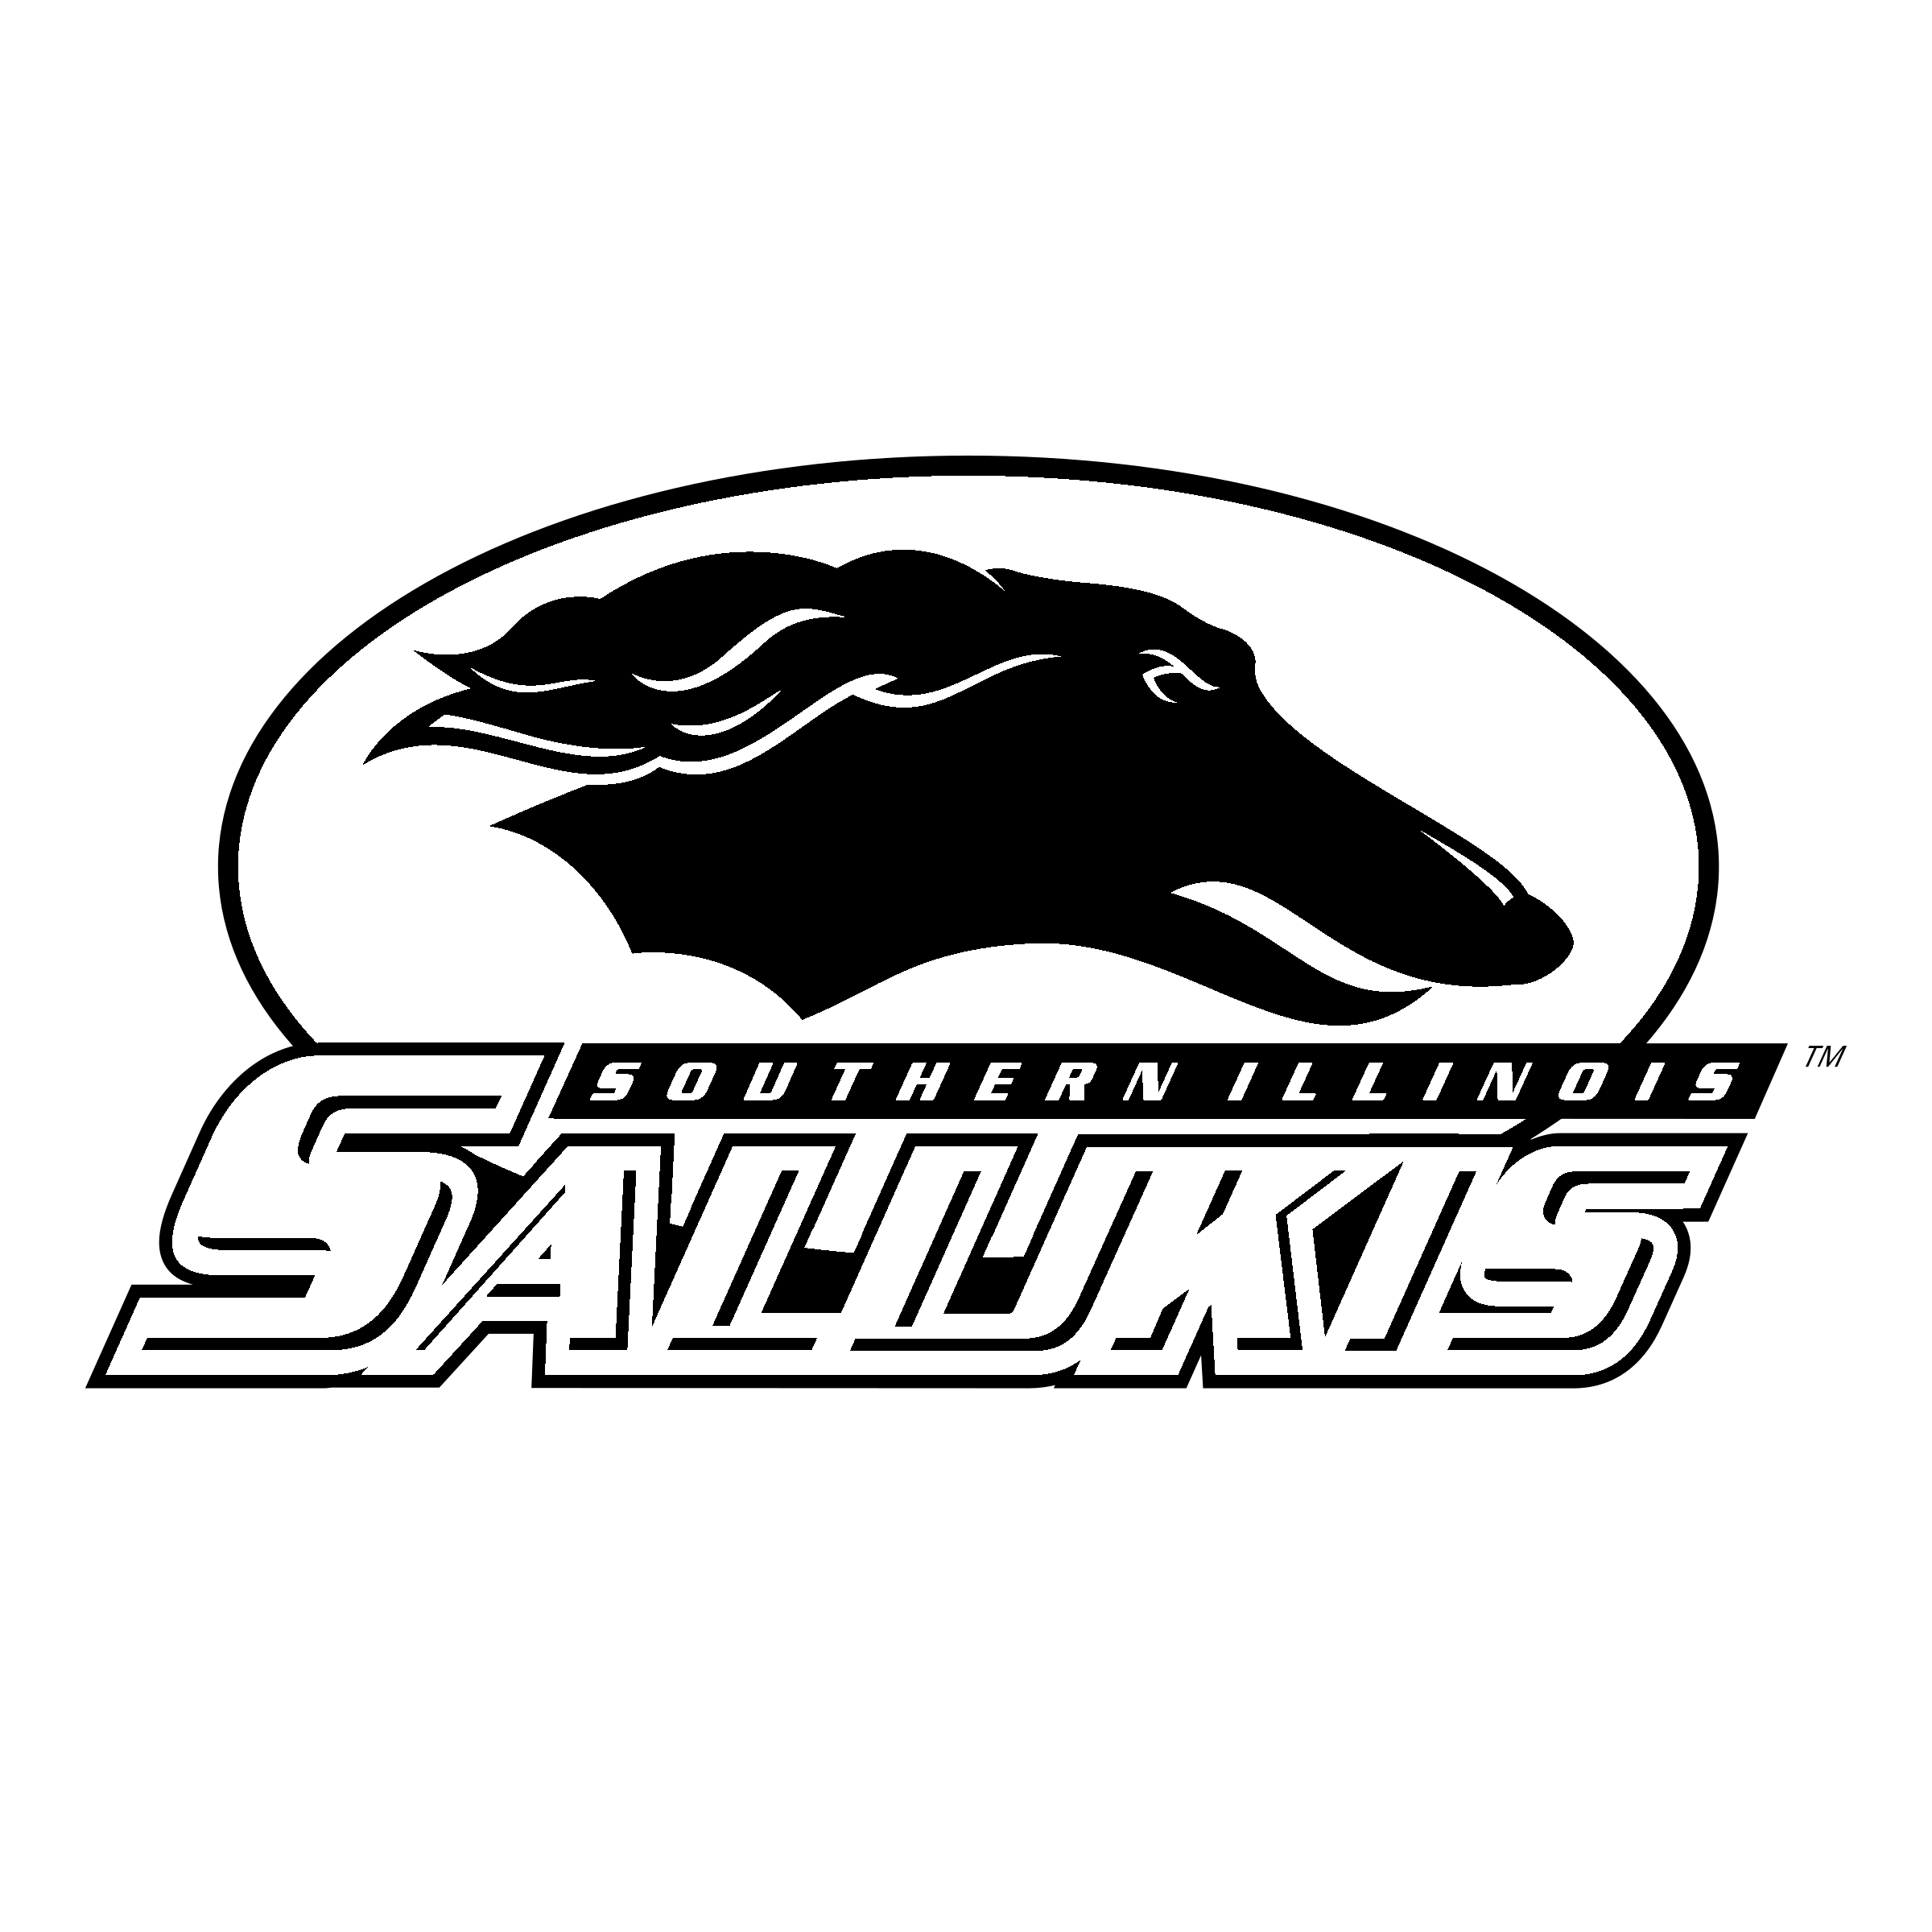 Southern Illinois Salukis Logo - Southern Illinois Salukis Logo PNG Transparent & SVG Vector